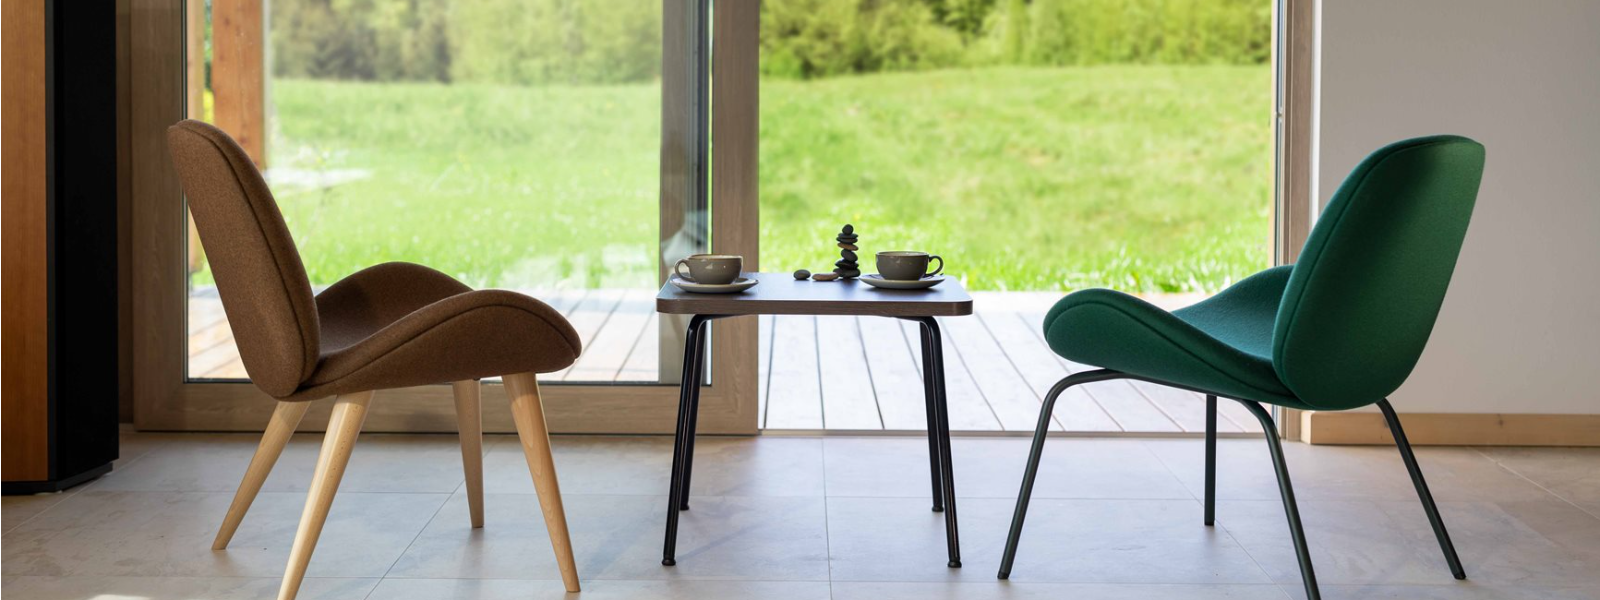 BÜROOMÖÖBLI KESKUS OÜ - We provide comprehensive office furniture offerings, from ergonomic chairs to acoustic panels.